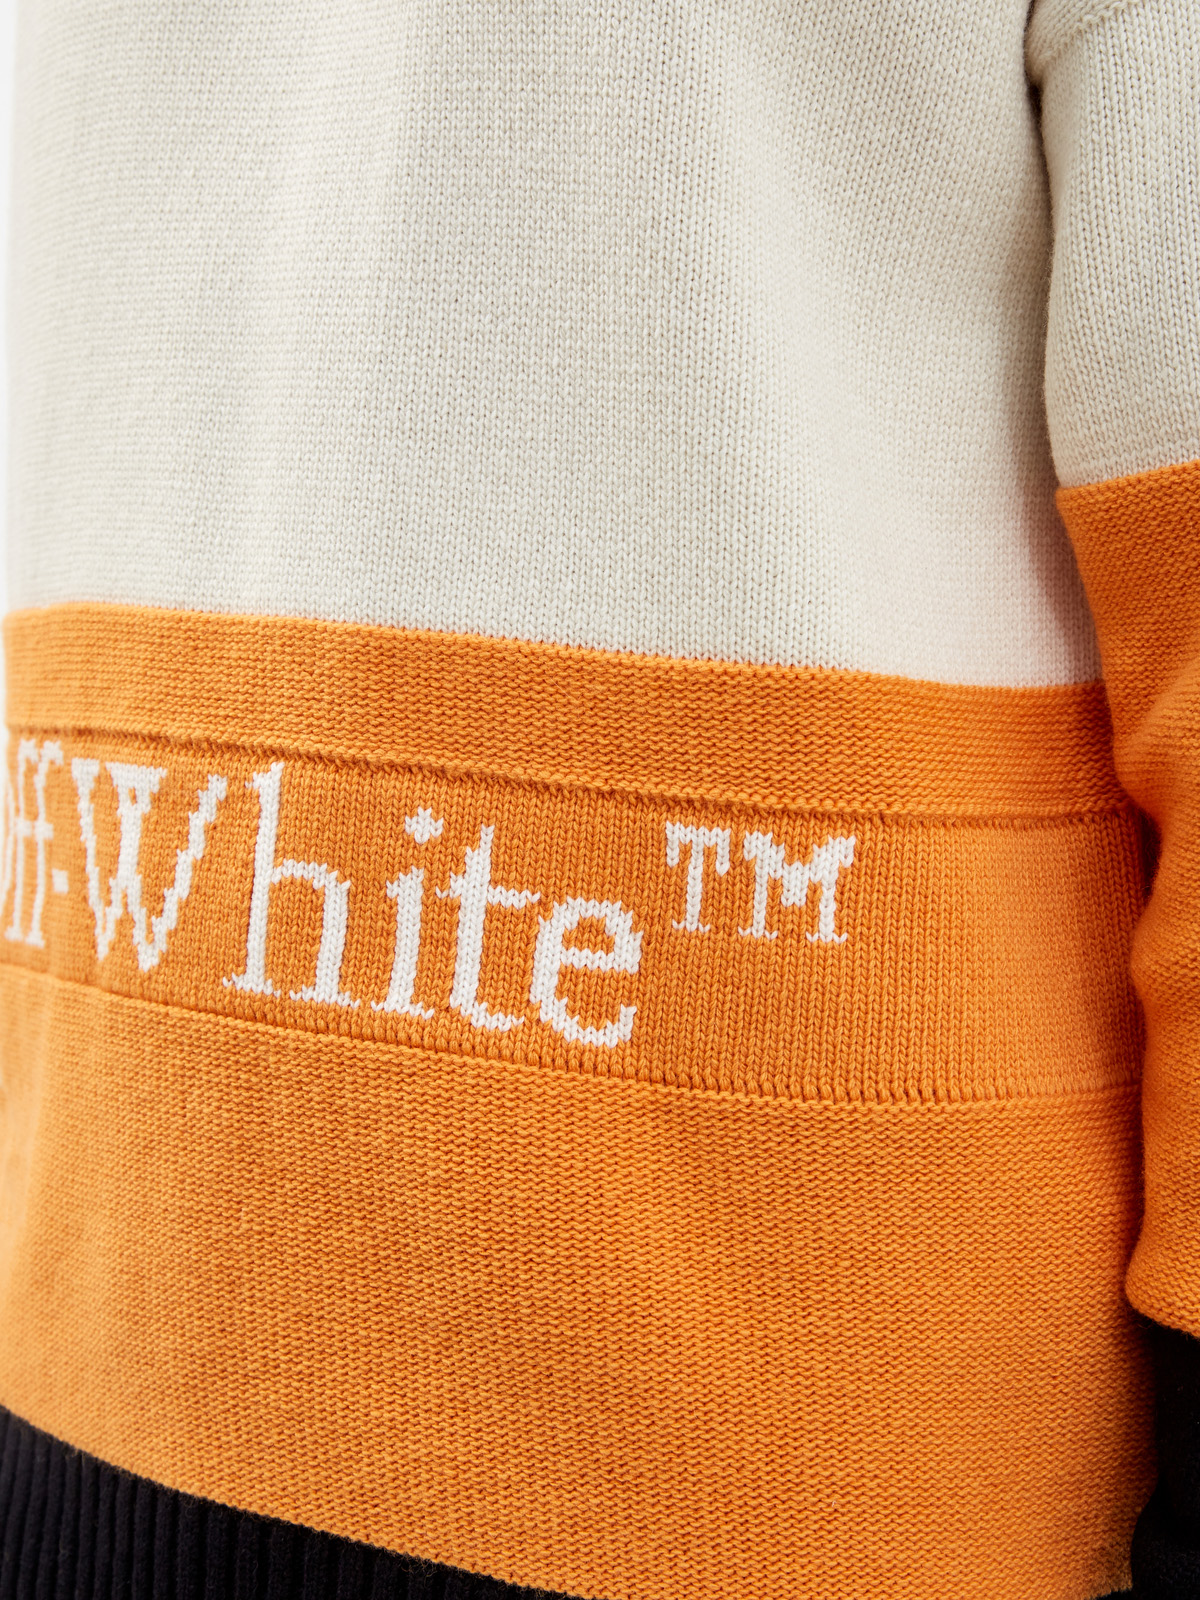 Джемпер Off-White c/o Virgil Abloh в стиле colorblock с принтом-интарсией OFF-WHITE, цвет мульти, размер 50;52 Джемпер Off-White c/o Virgil Abloh в стиле colorblock с принтом-интарсией - фото 5